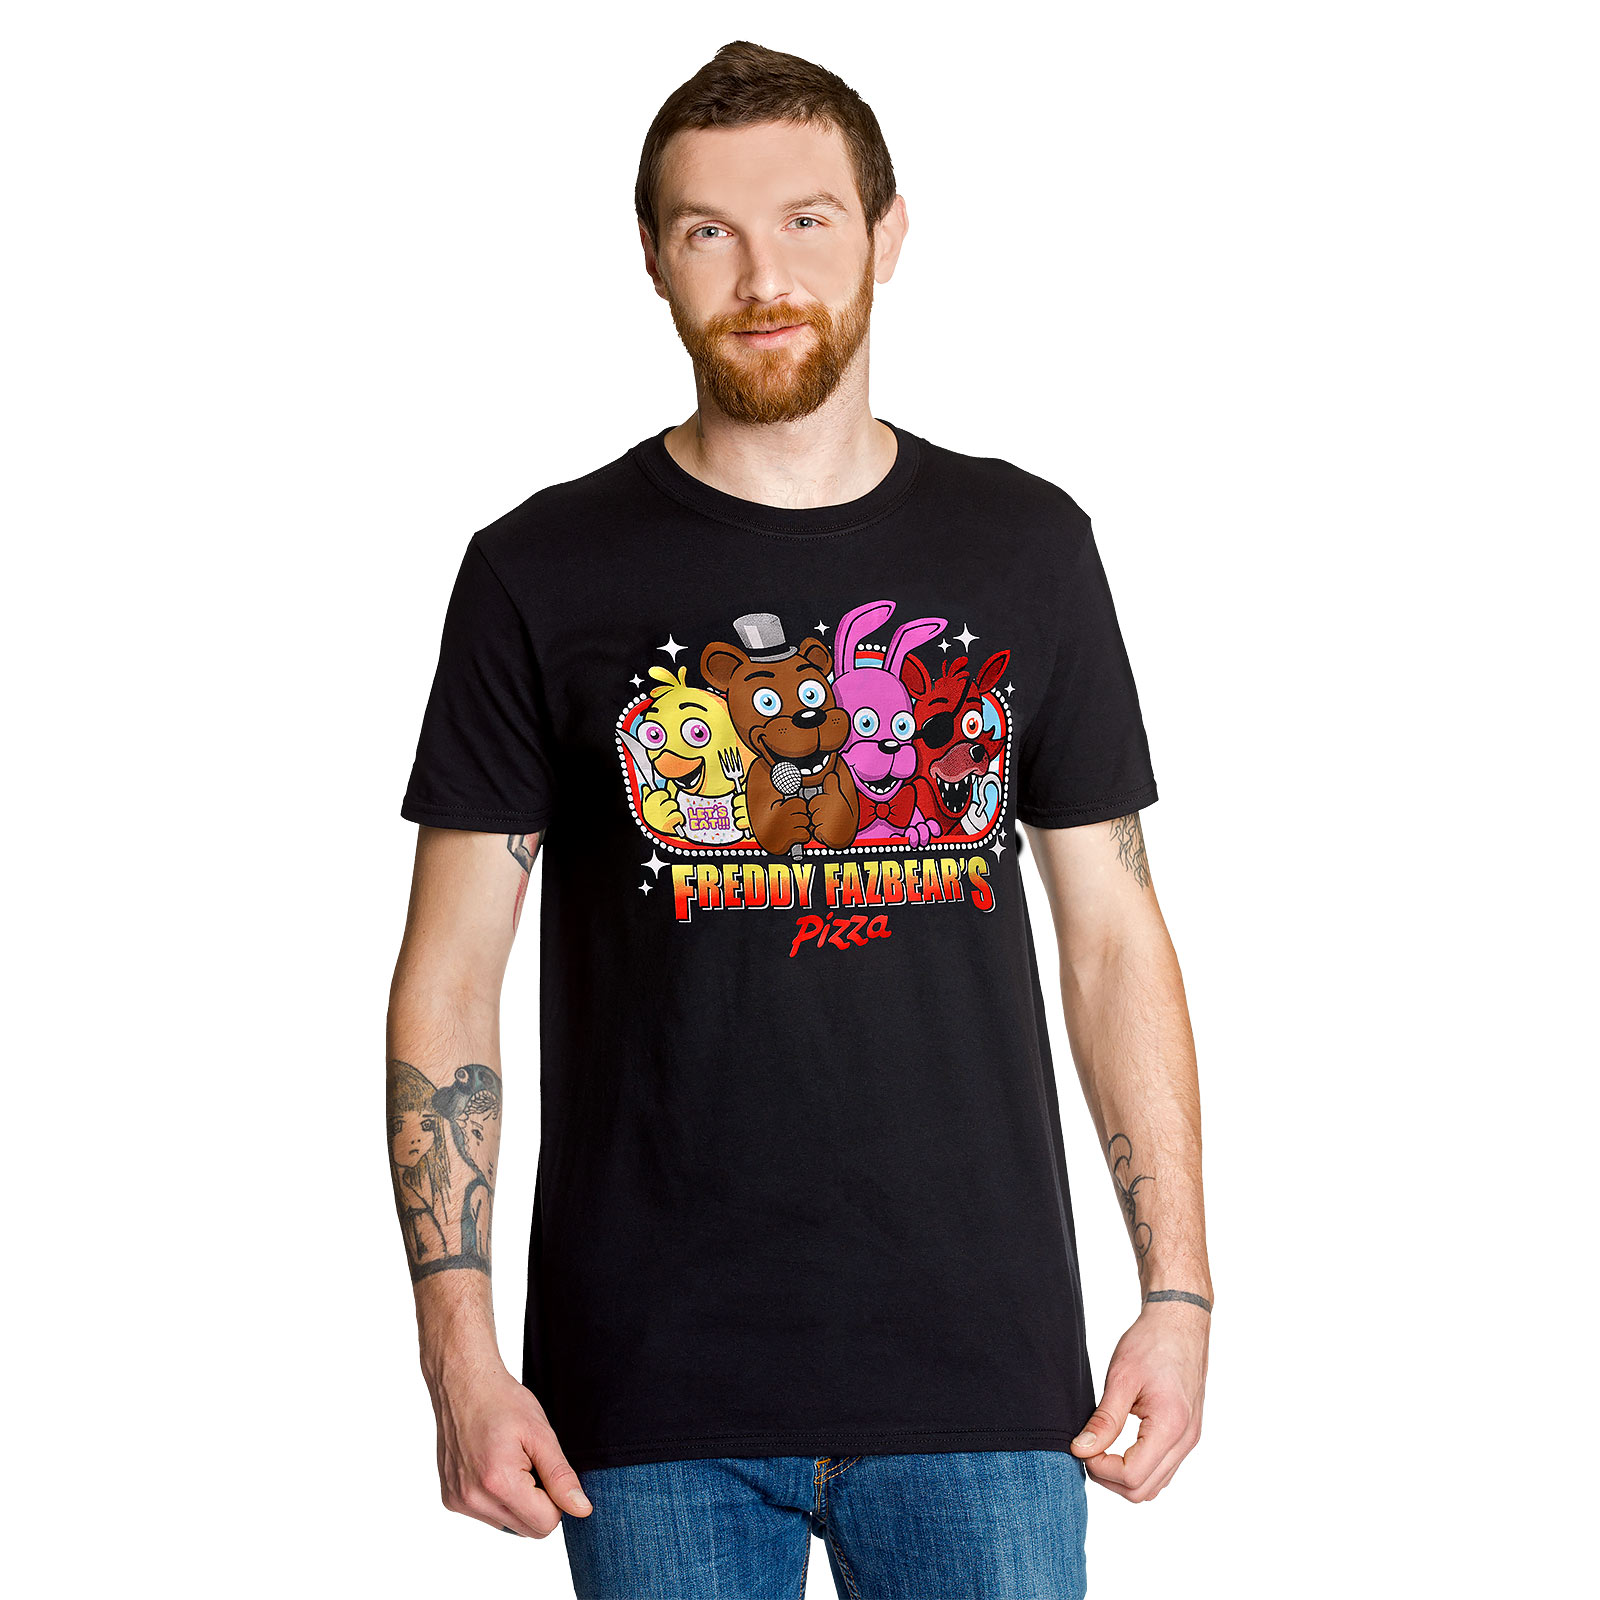 Five Nights at Freddys - Freddy Fazbears Pizza T-Shirt